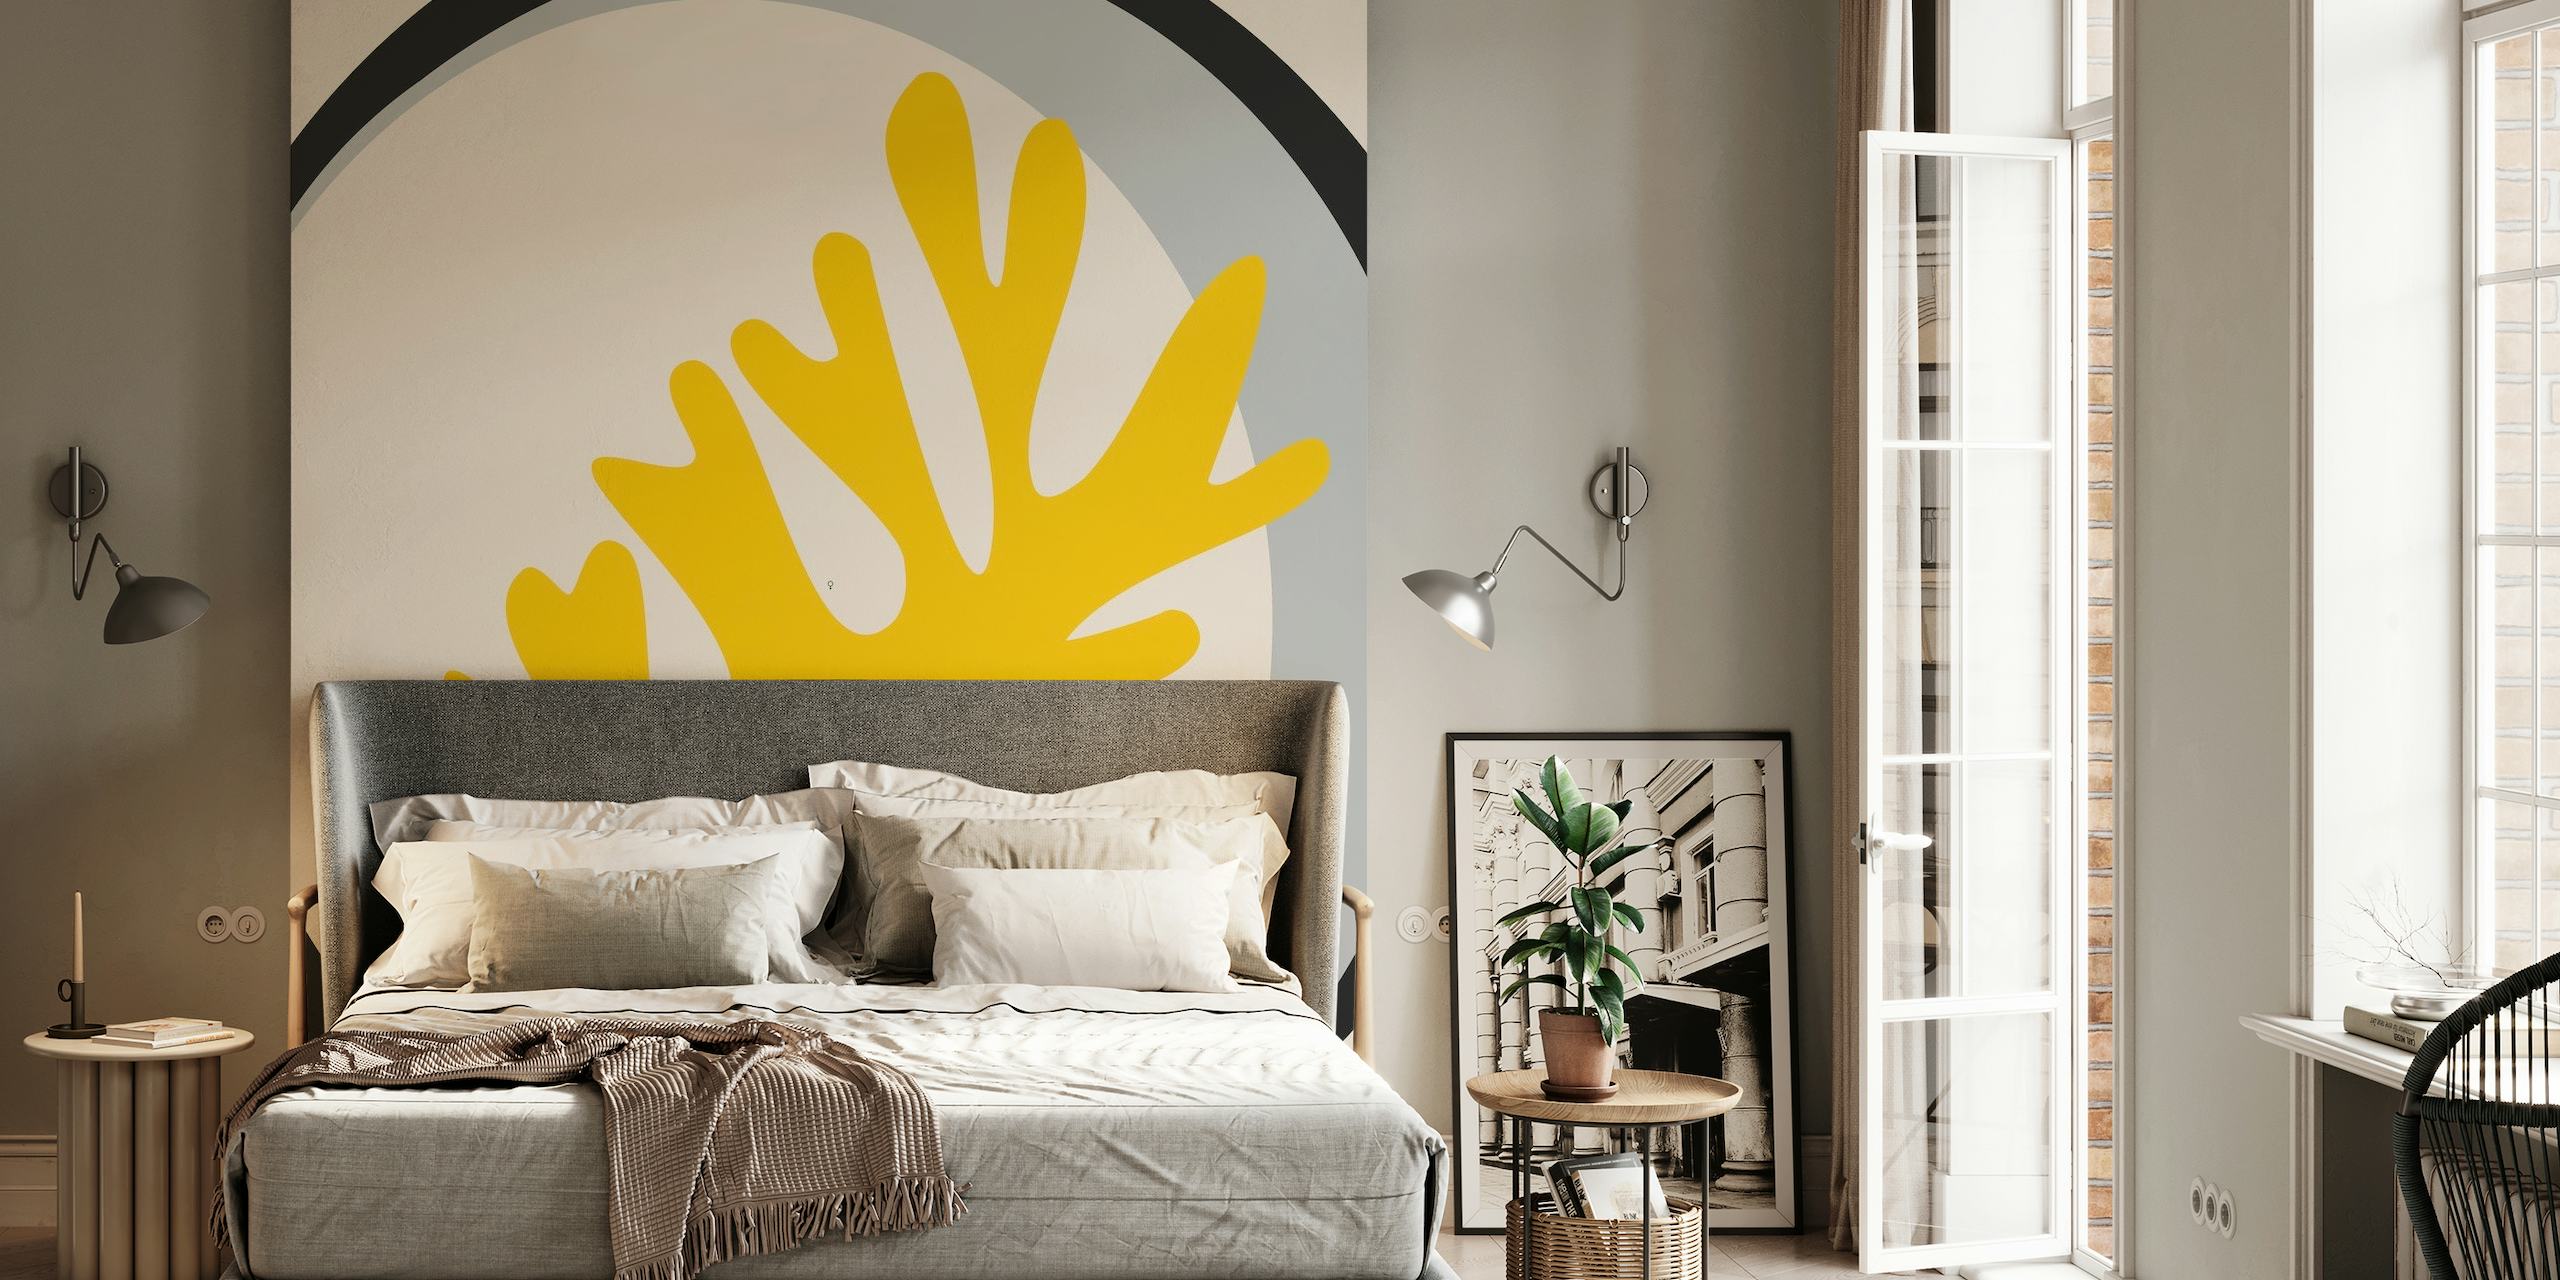 Matisse Inspired Yellow Leaf behang